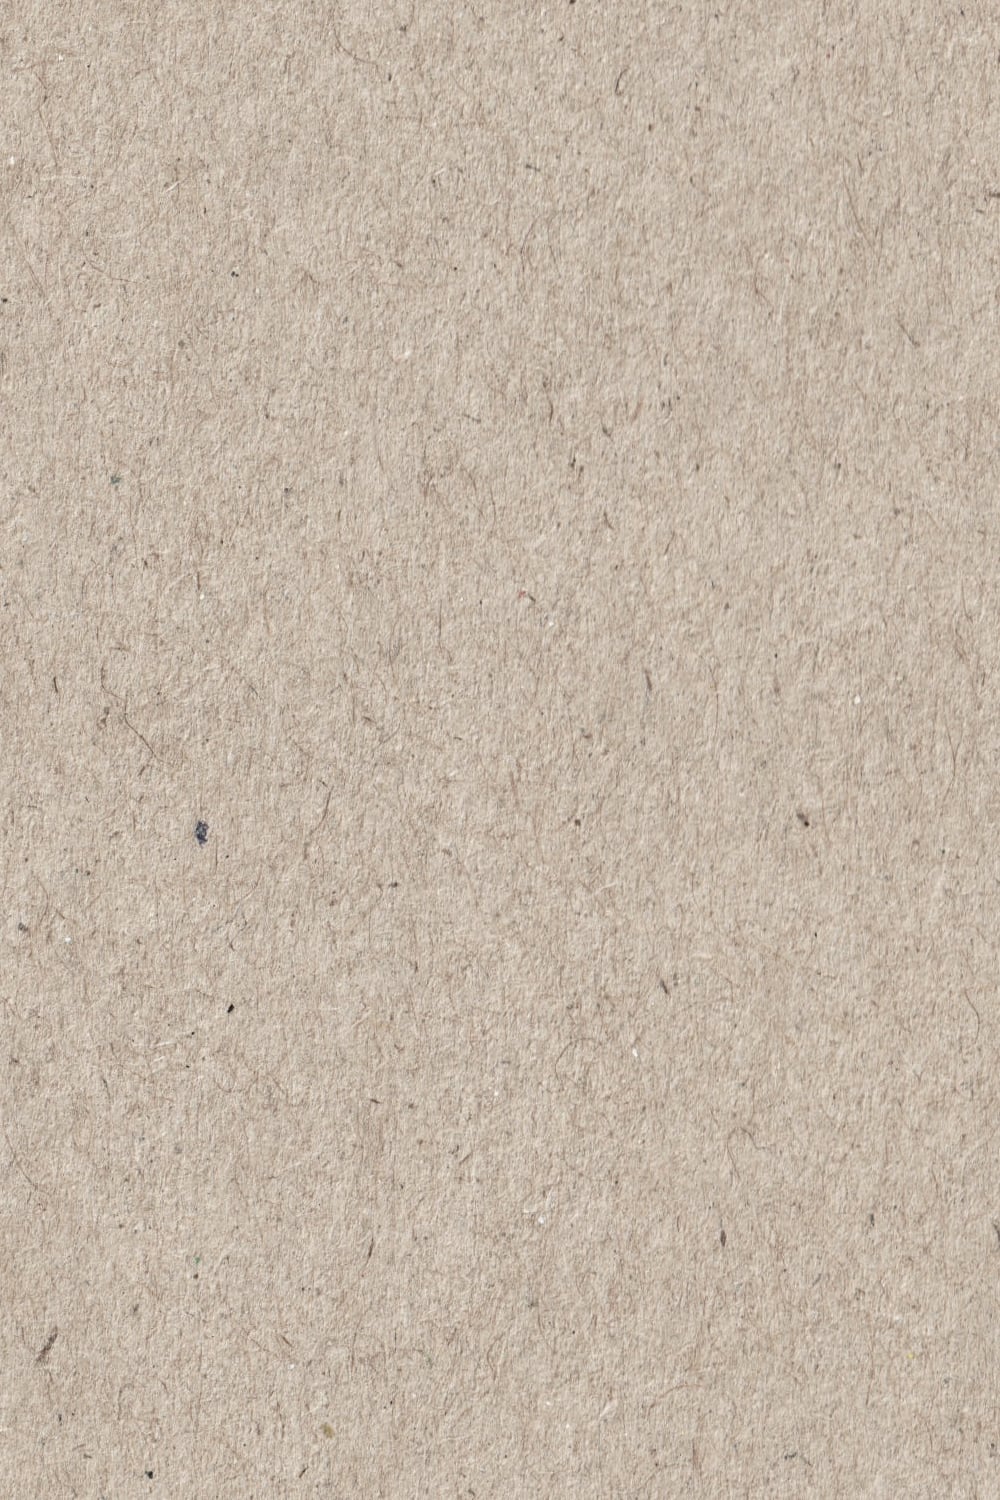 Grey Cardboard Paper, close-up